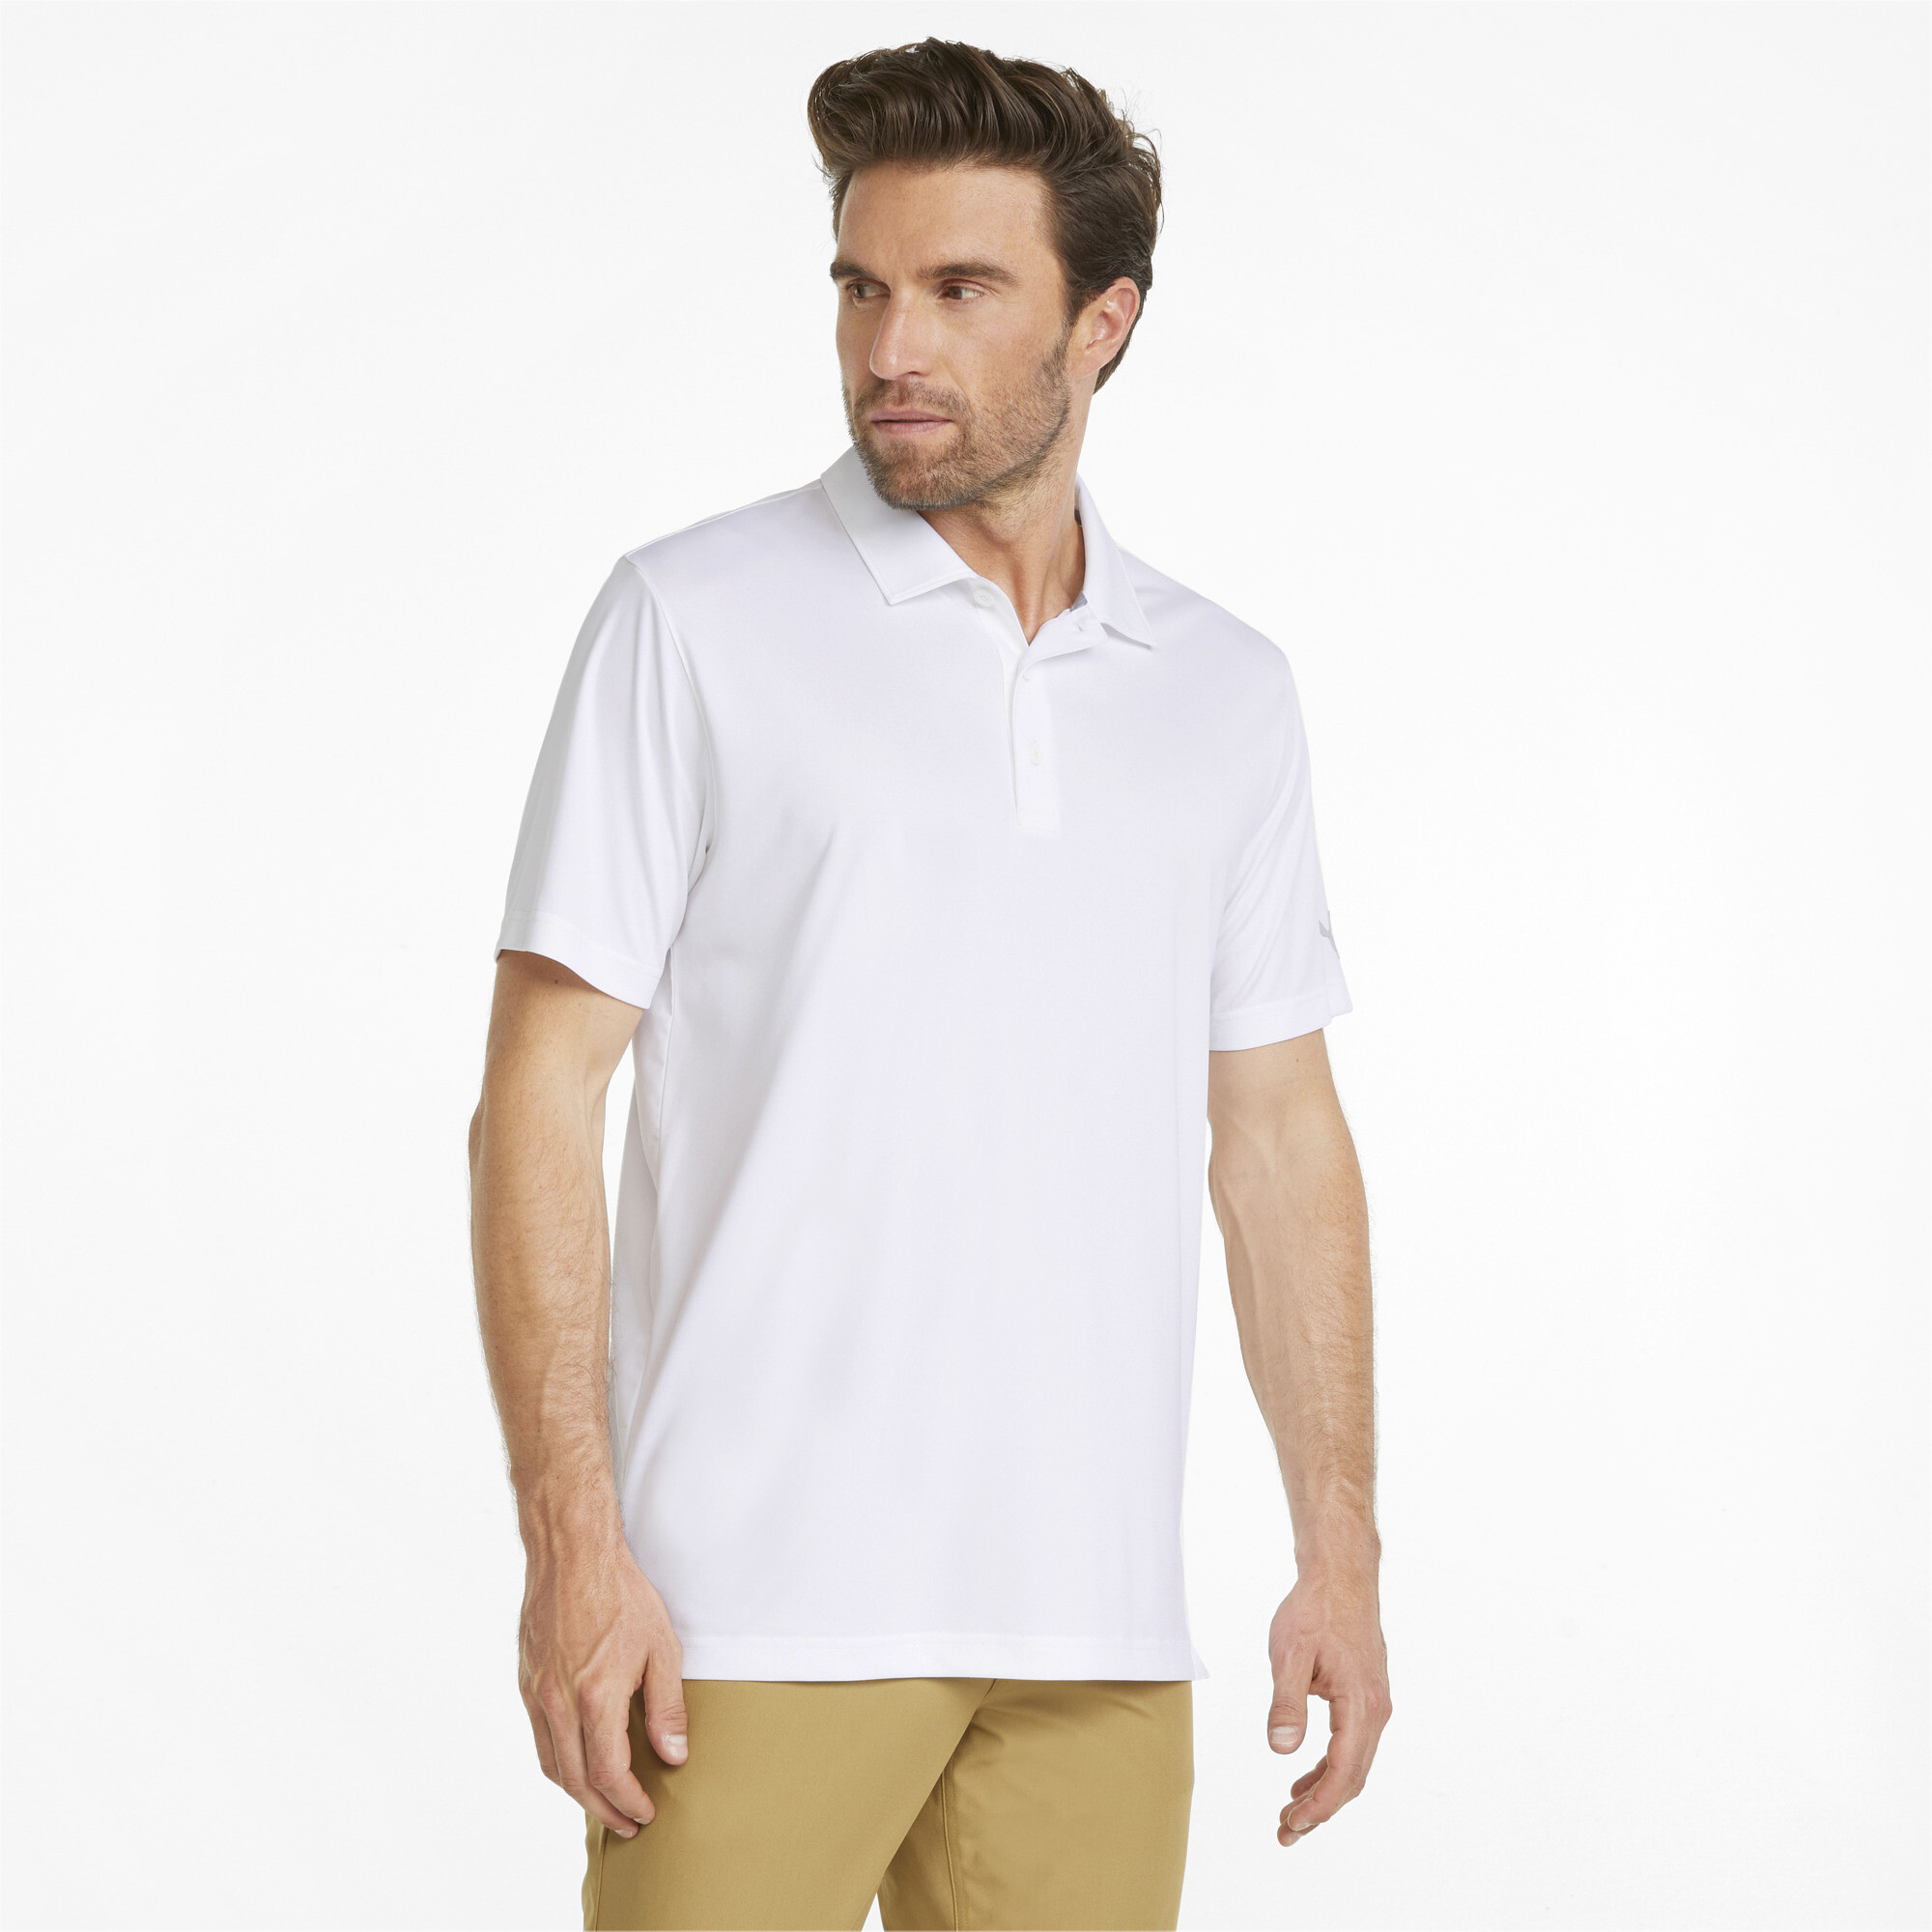 Men's Puma Gamer's Golf Polo Shirt T-Shirt, White T-Shirt, Size 5XL T-Shirt, Clothing